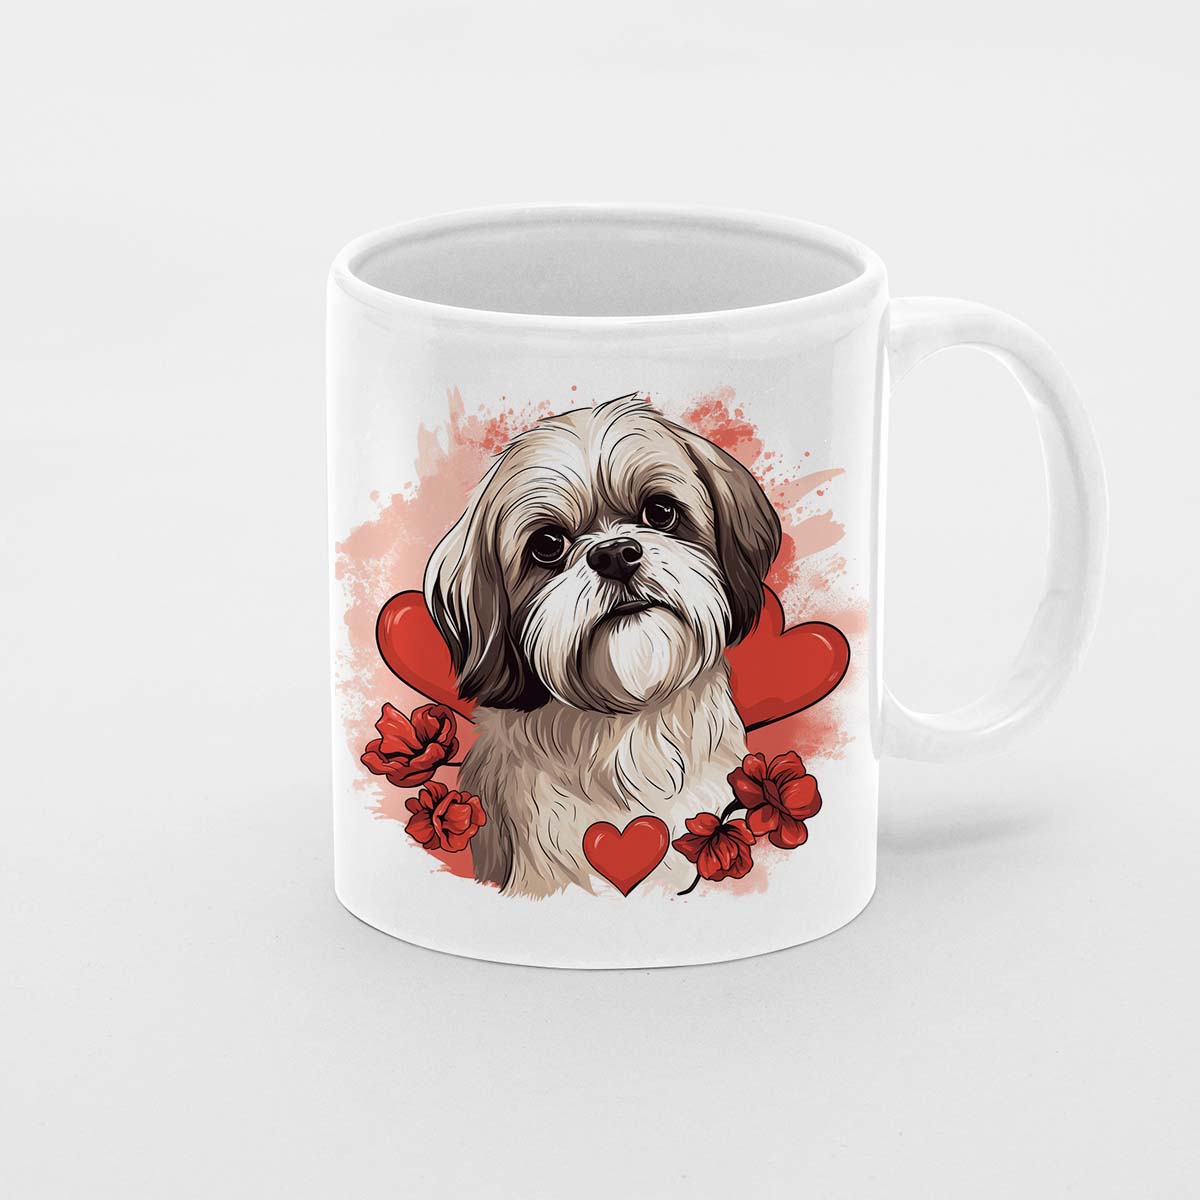 Custom Valentine's Day Dog Mug, Personalized Valentine's Day Gift for Dog Lover, Cute Shih Tzu Love Ceramic Mug, Dog Coffee Mugs, Personalized Pet Mugs, Cute Valentine Puppy Heart Ceramic Mug, Valentines Gift